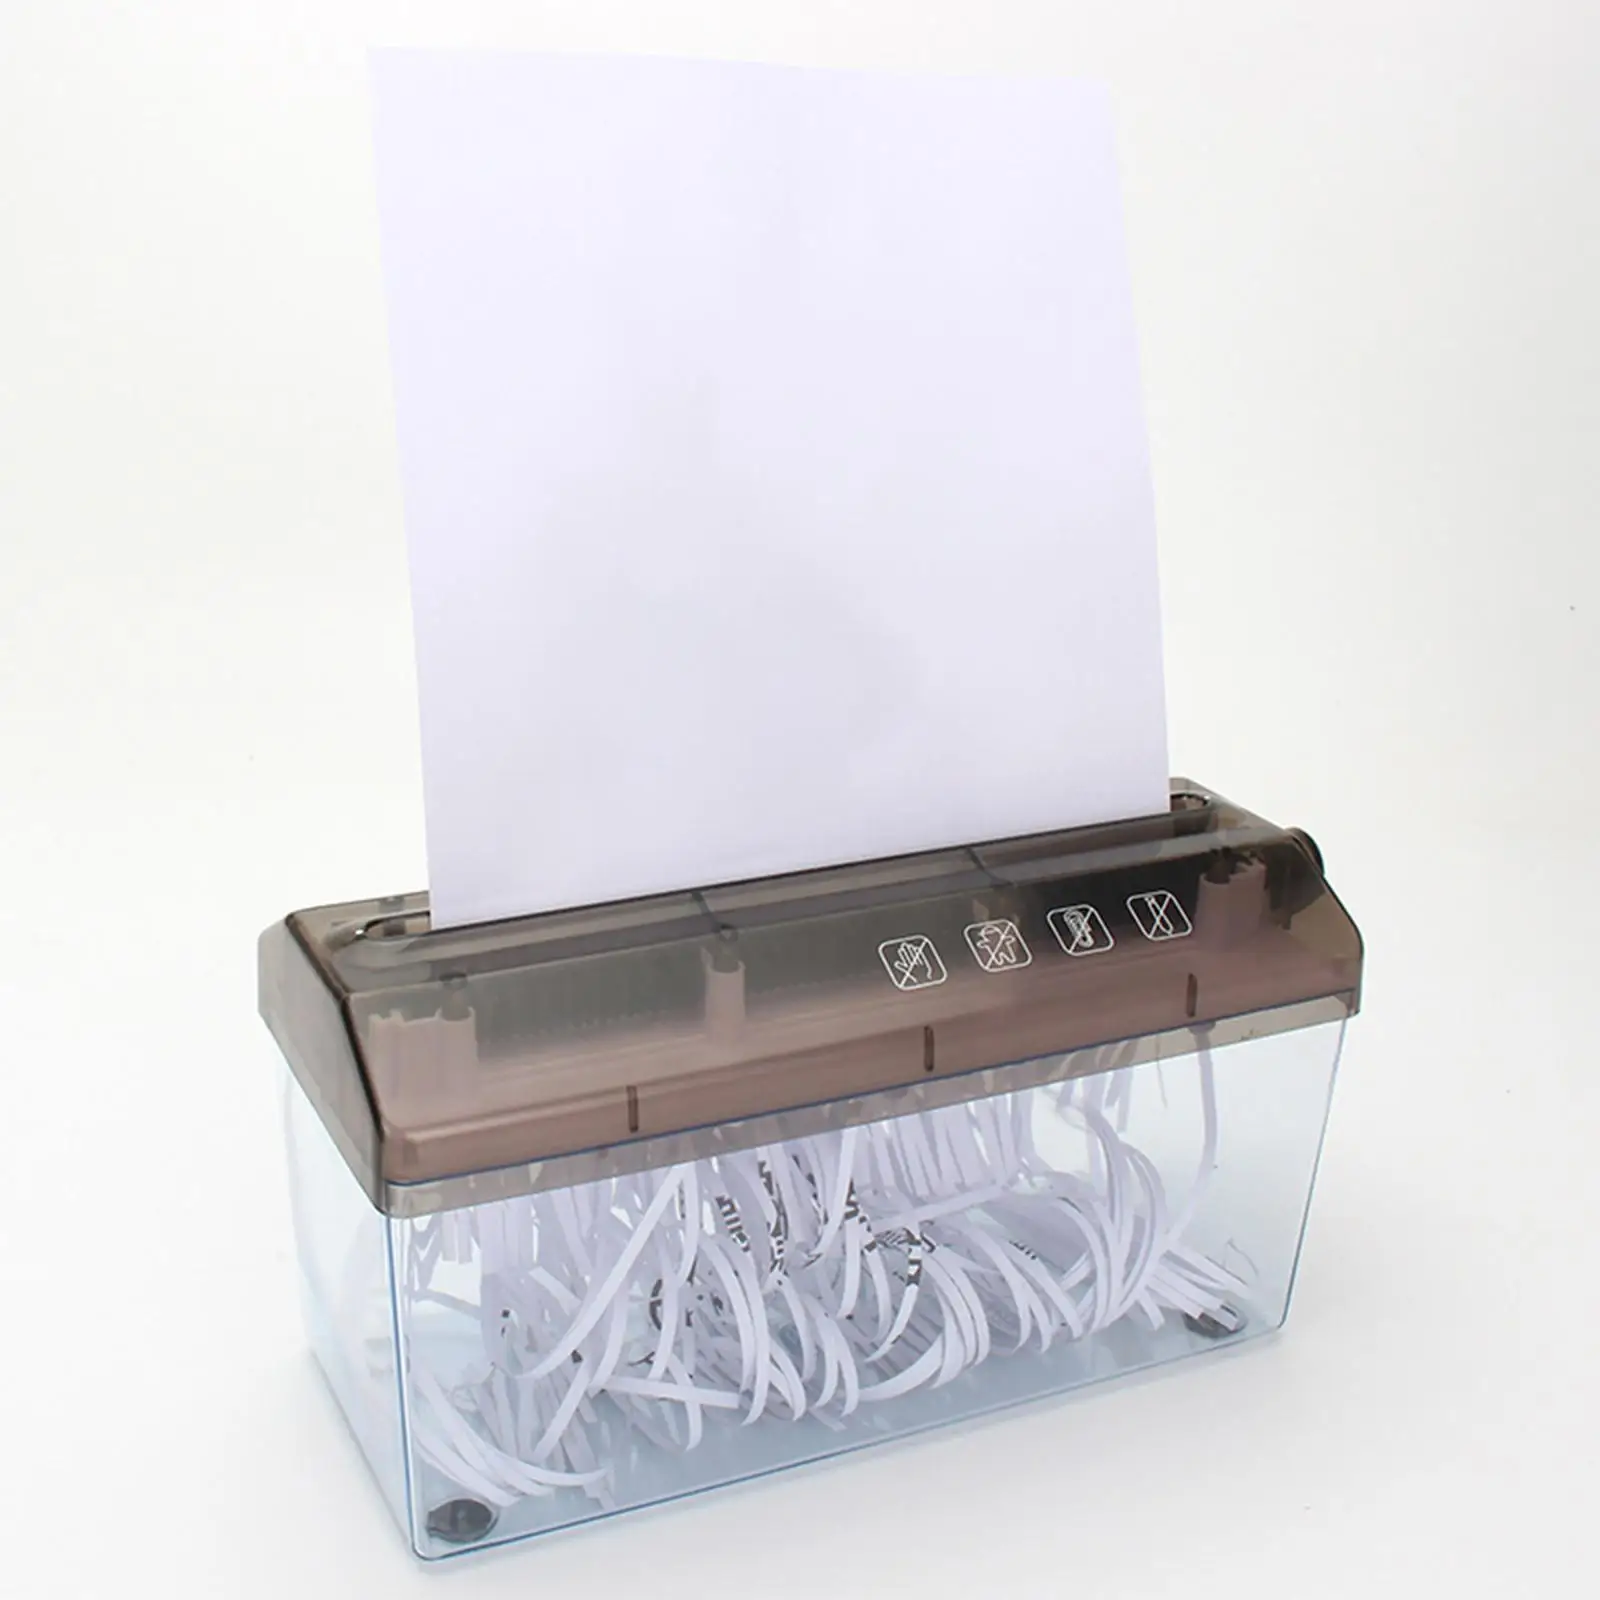 Portable Hand Shredder Desktop Stationery Manual Shredder Hand Crank Cutting Machine for Office Bills Notes Household